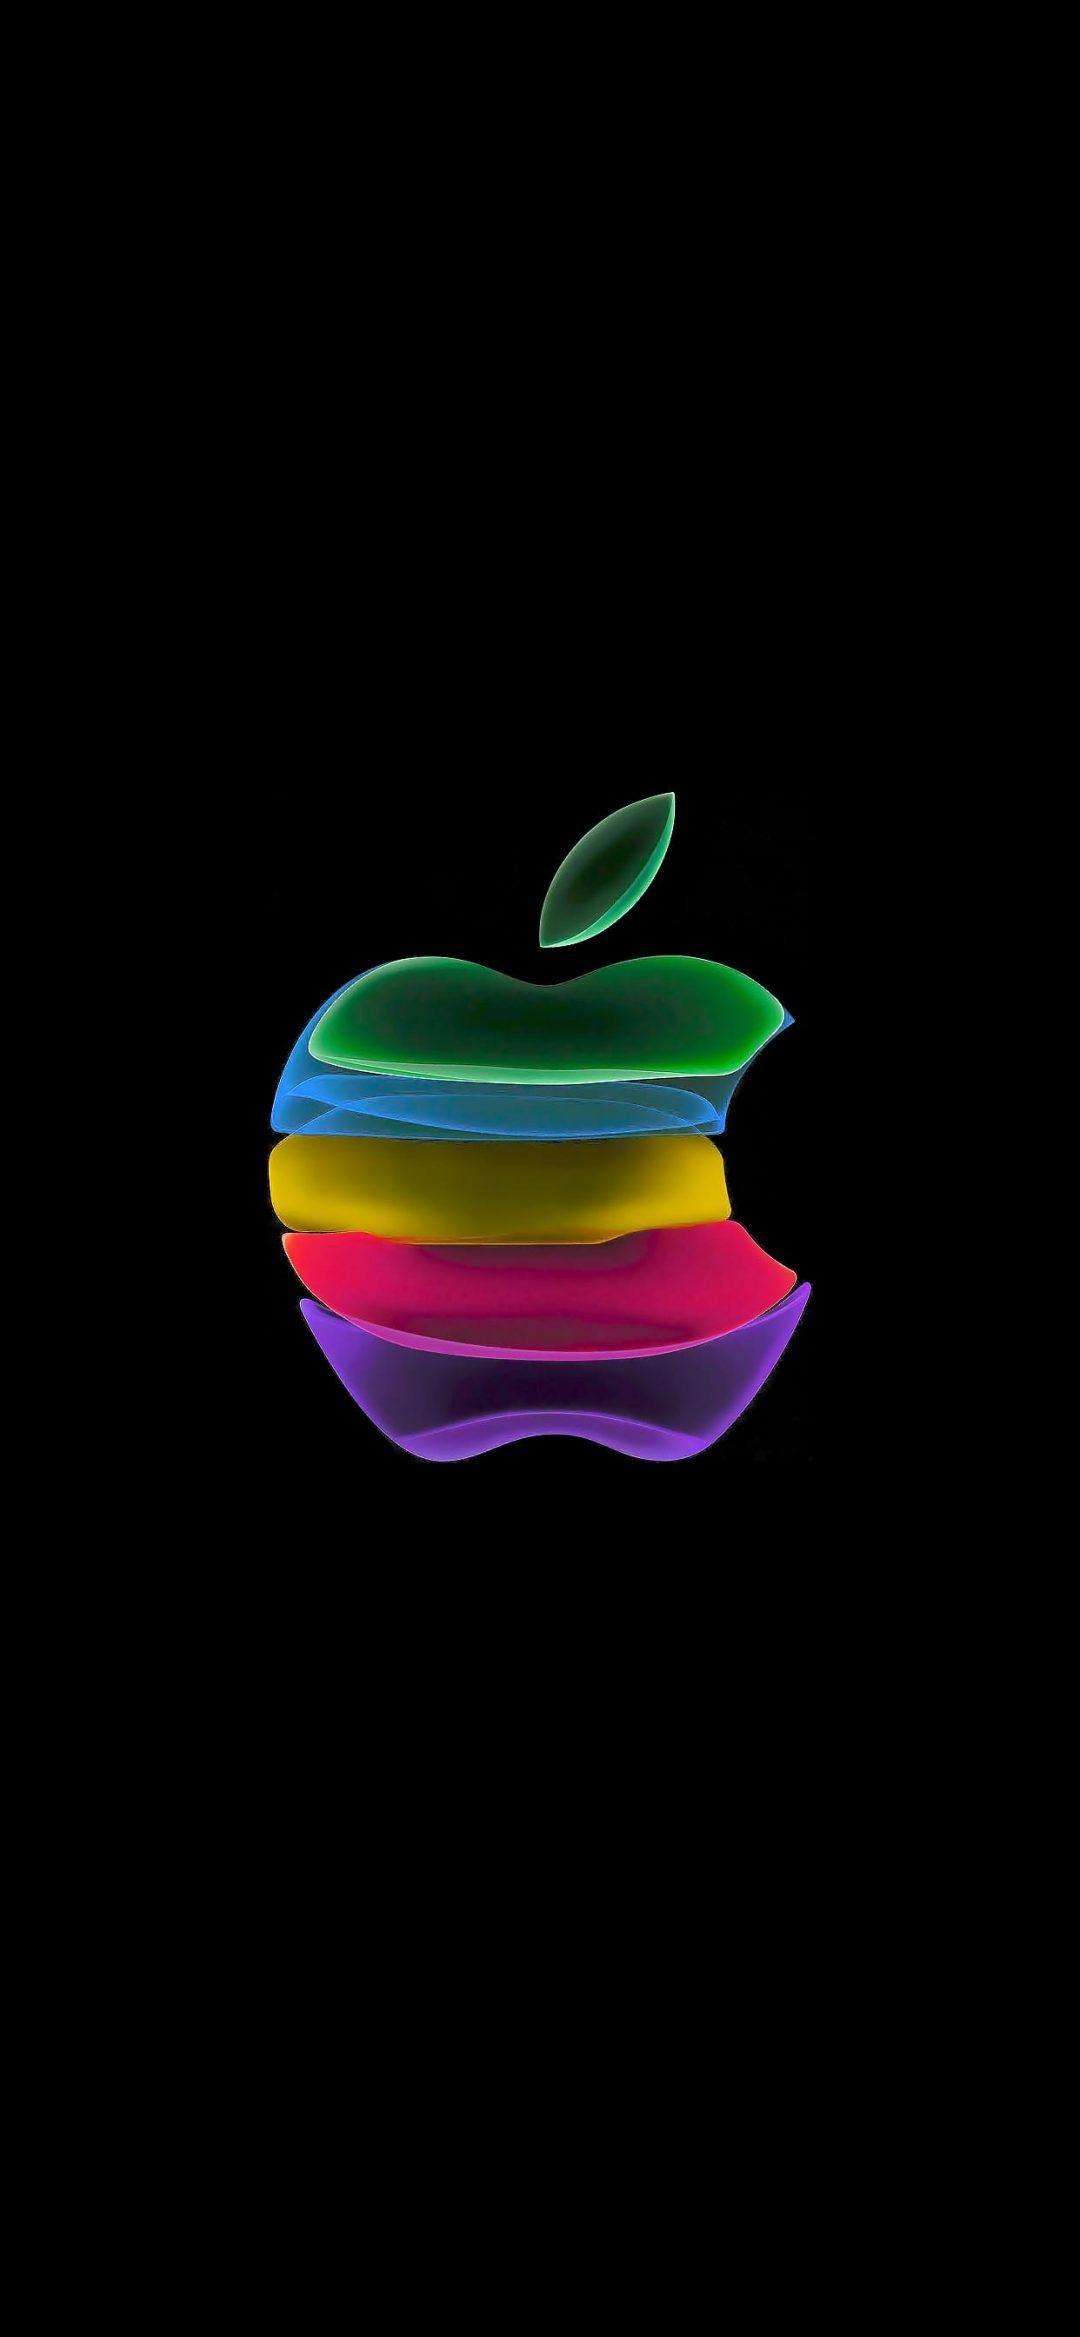 Iphone 12 Apple Logo Wallpapers - Top Free Iphone 12 Apple Logo